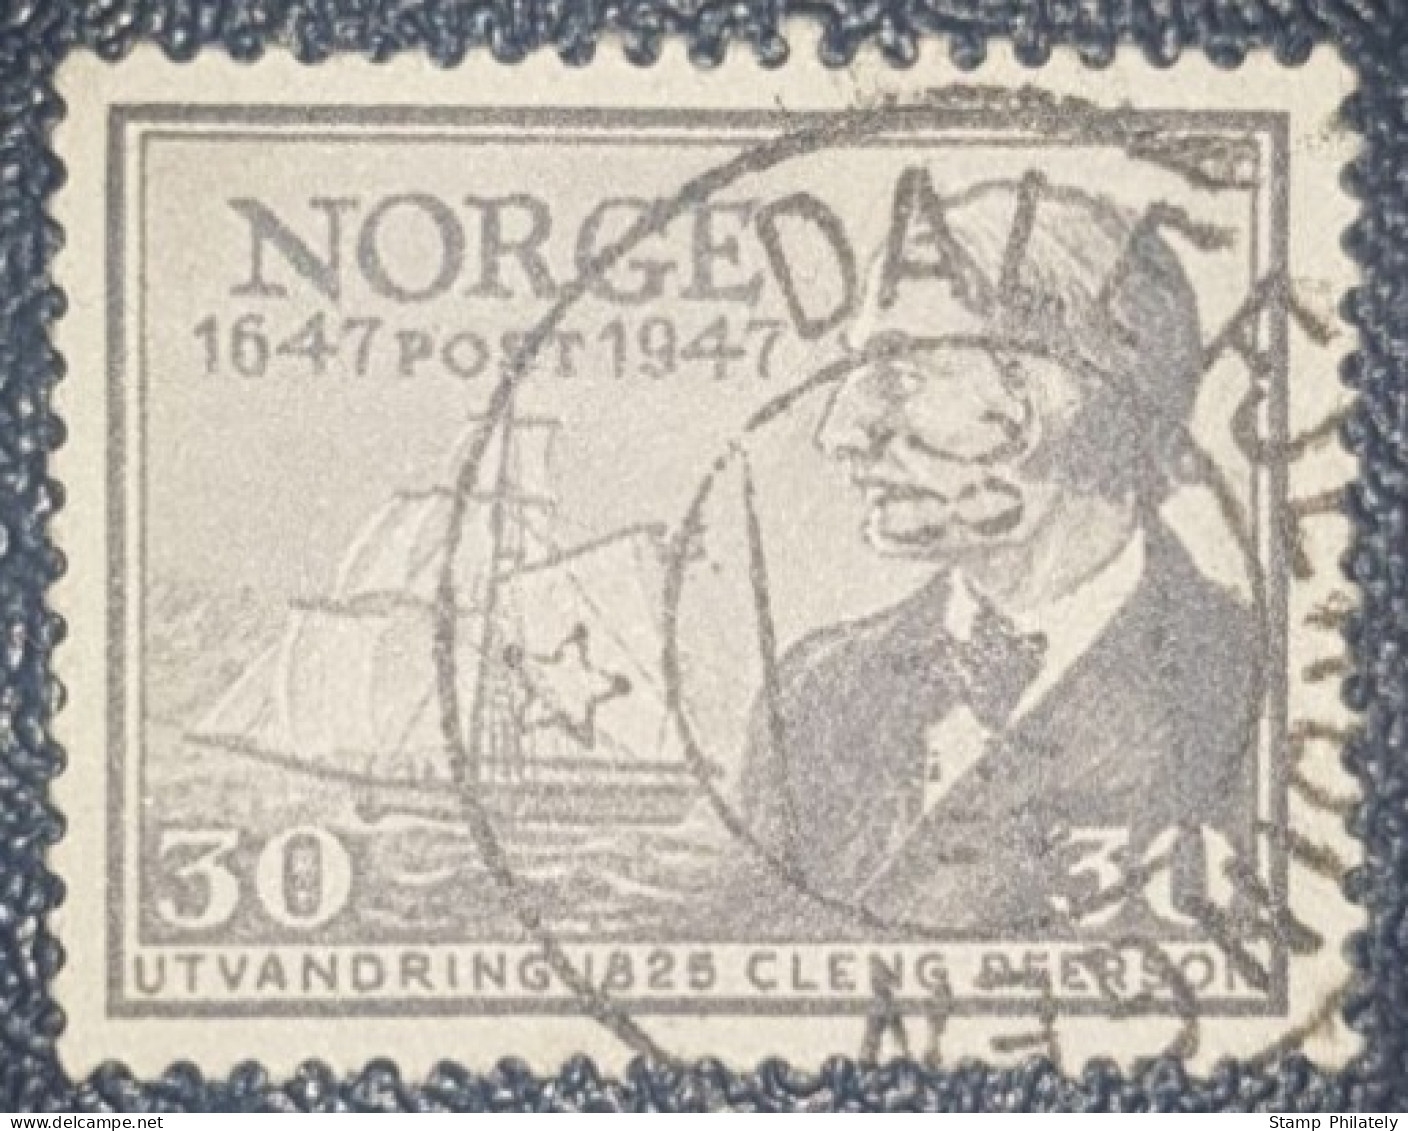 Norway 30 Postmark Stamp 1947 - Used Stamps